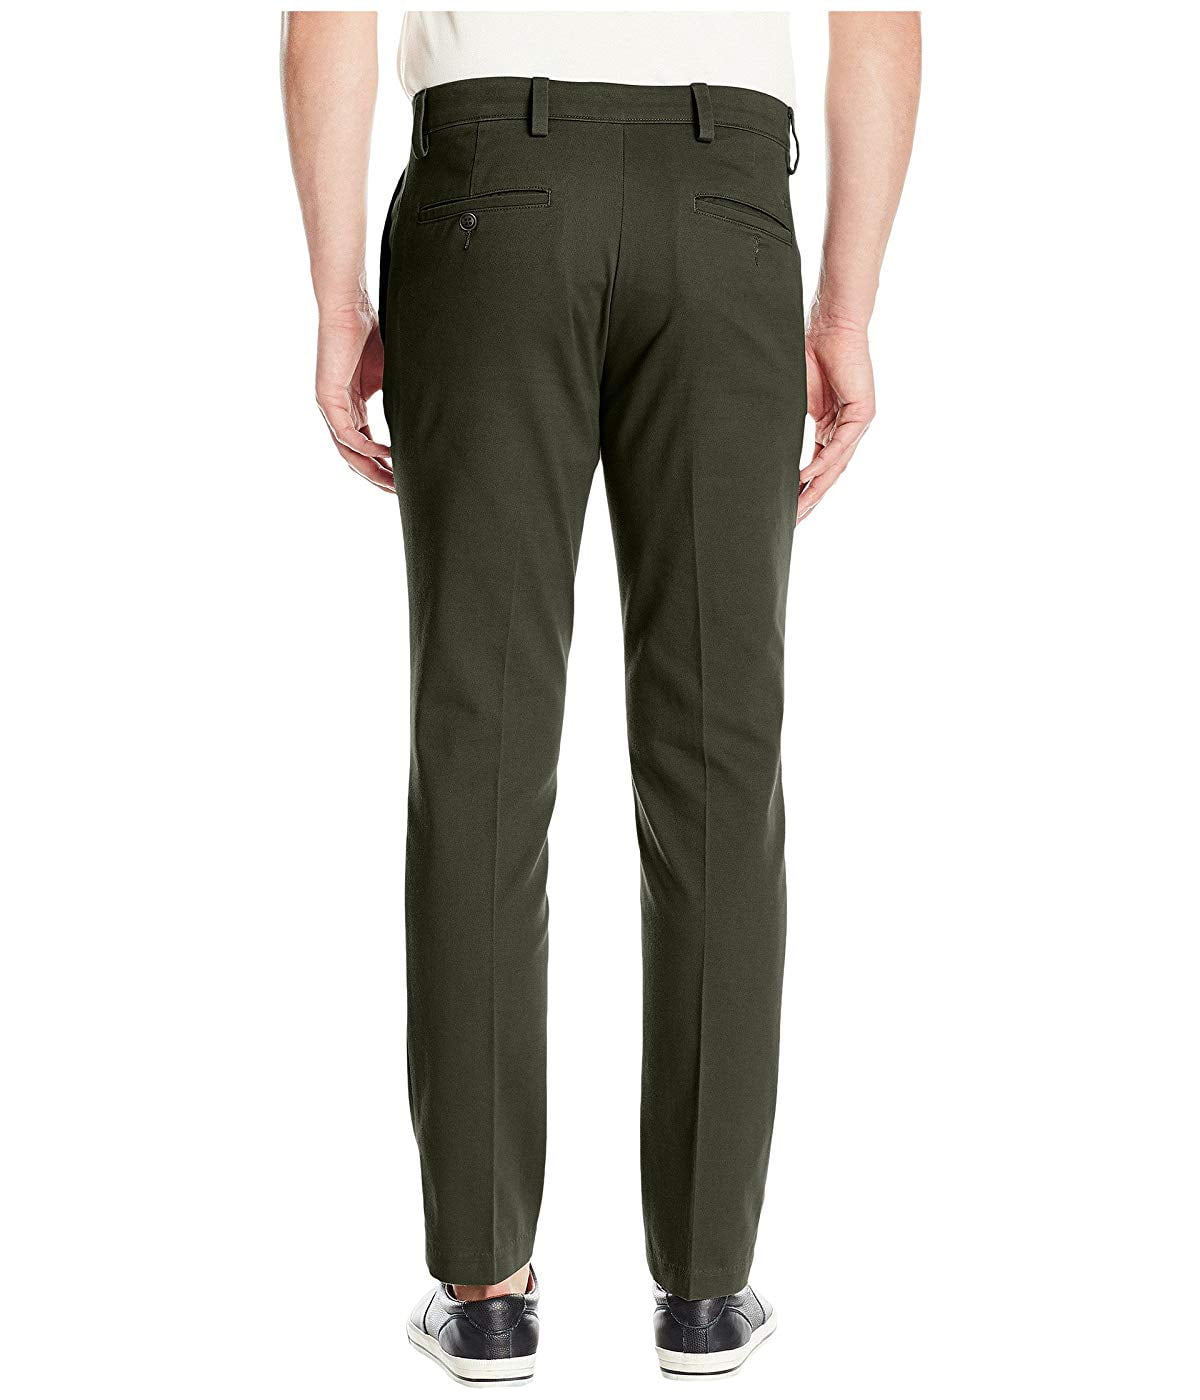 Dockers Easy Khaki Slim Fit Pants Olive Grove - Walmart.com